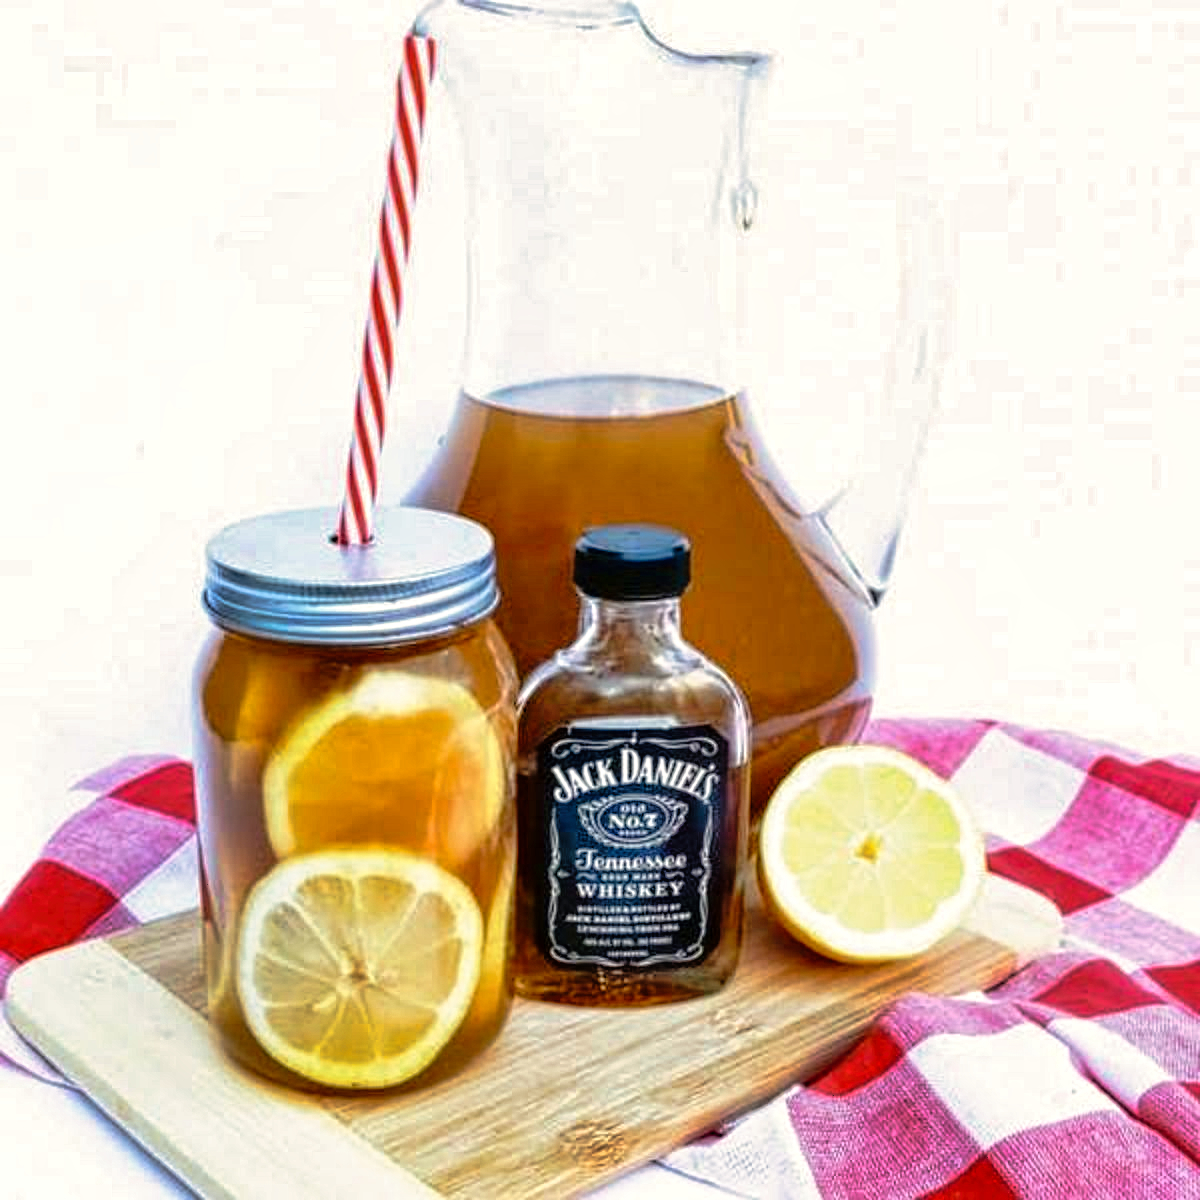 10. Jack Daniels Iced Tea- Jack Daniels drinks